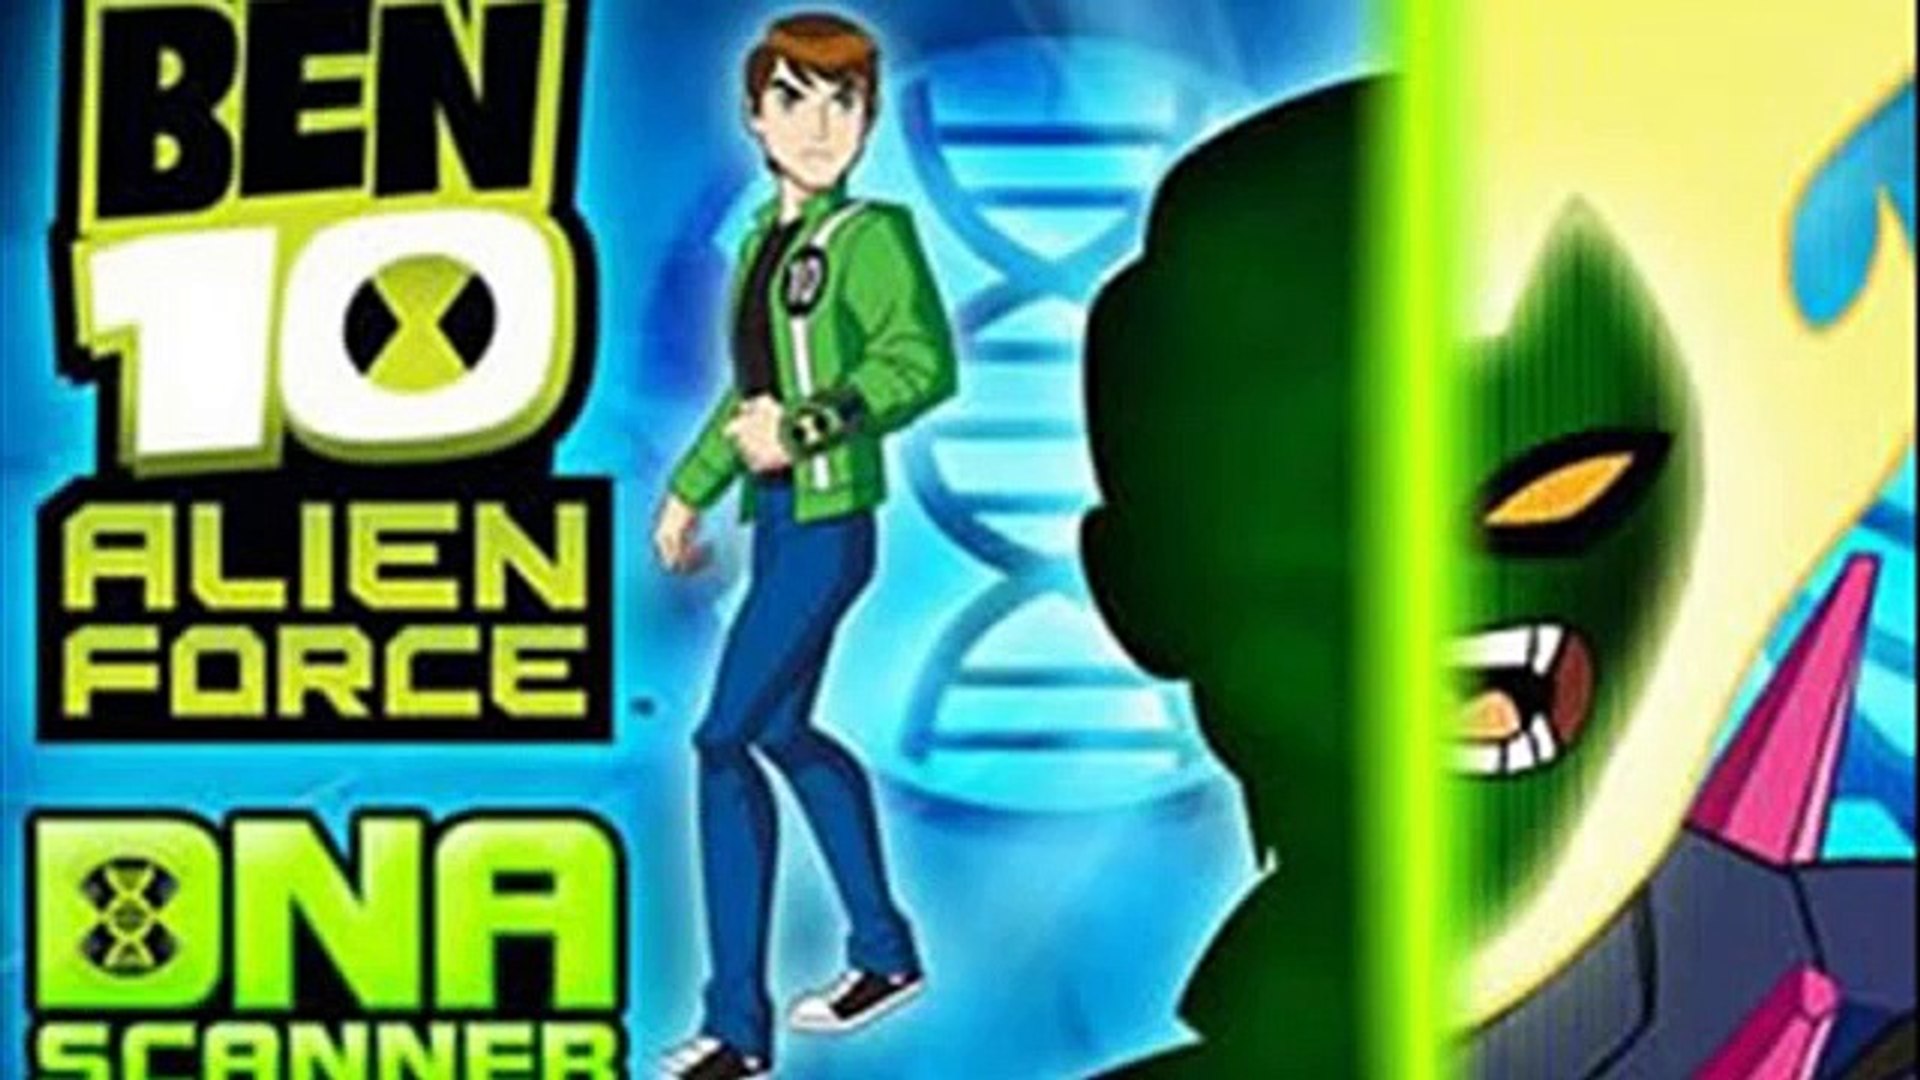 cartoon network arabic ben 10 alien maker games - video Dailymotion